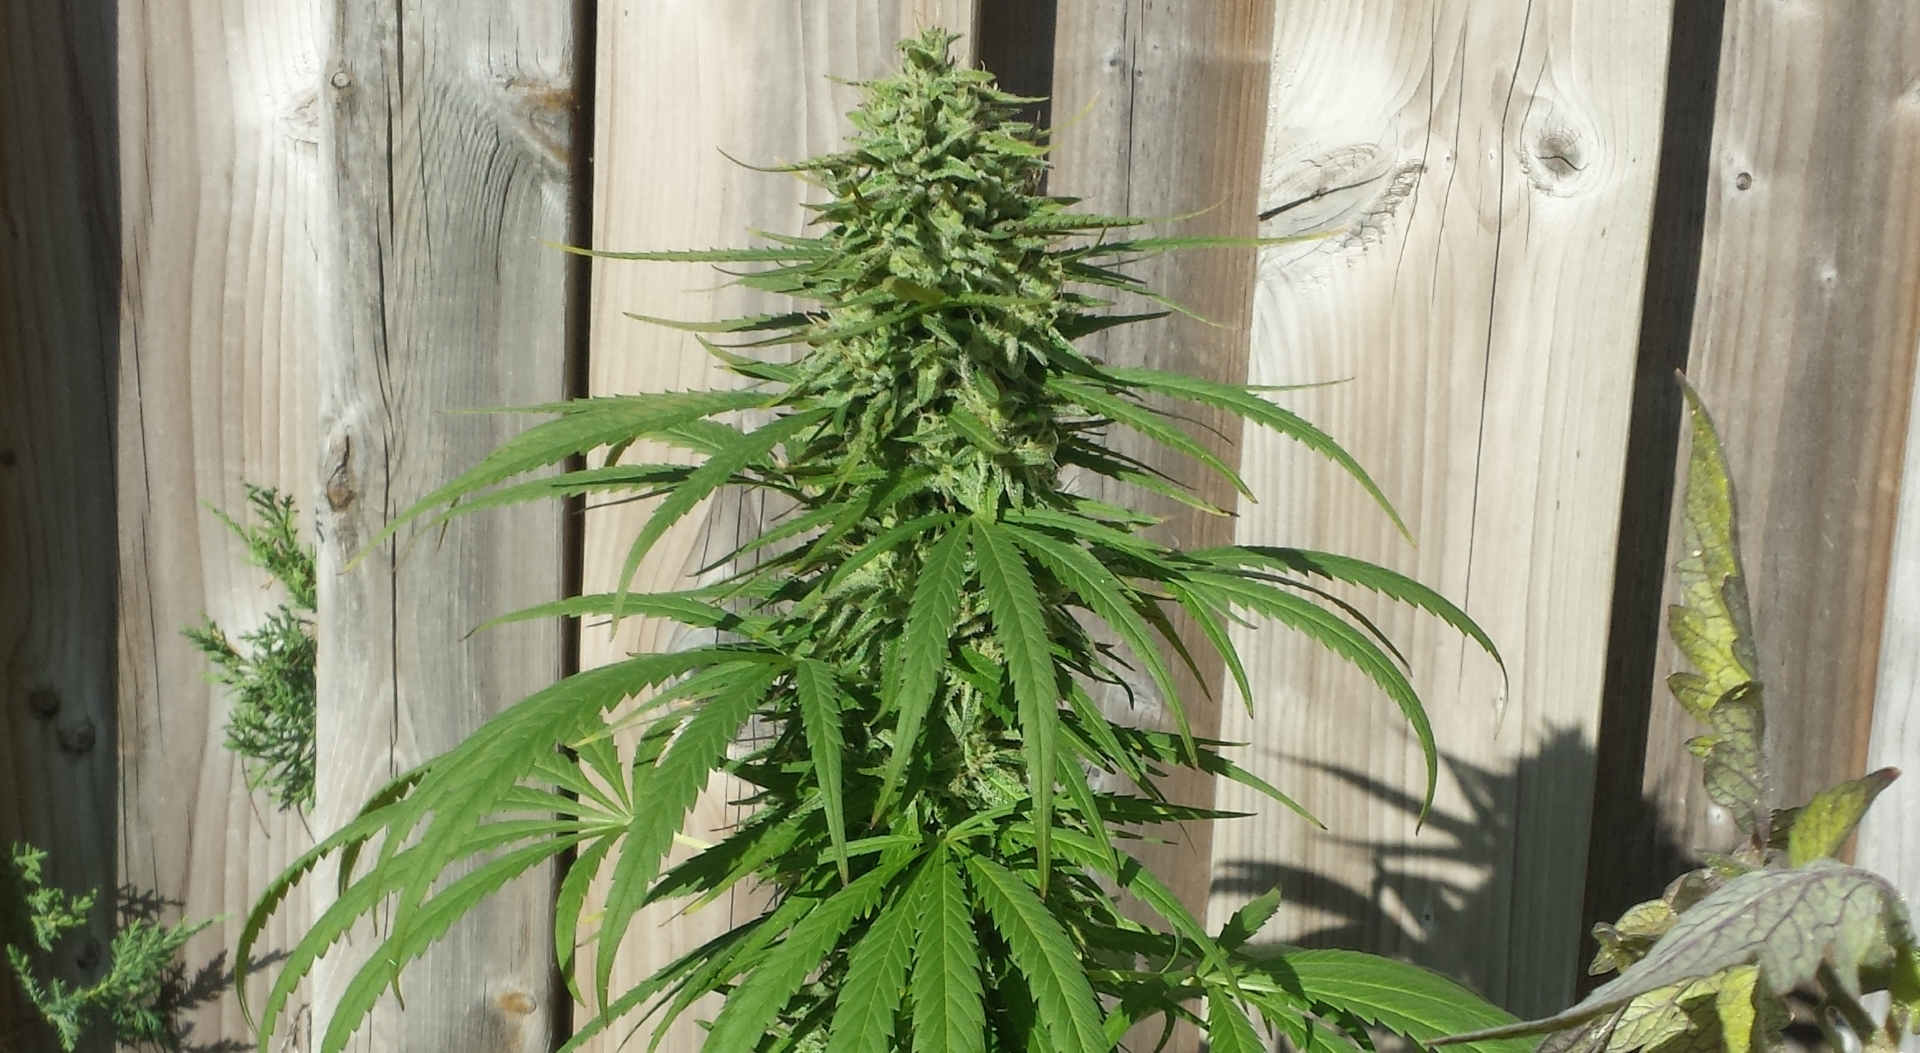 Marijuana plant growing outdoors